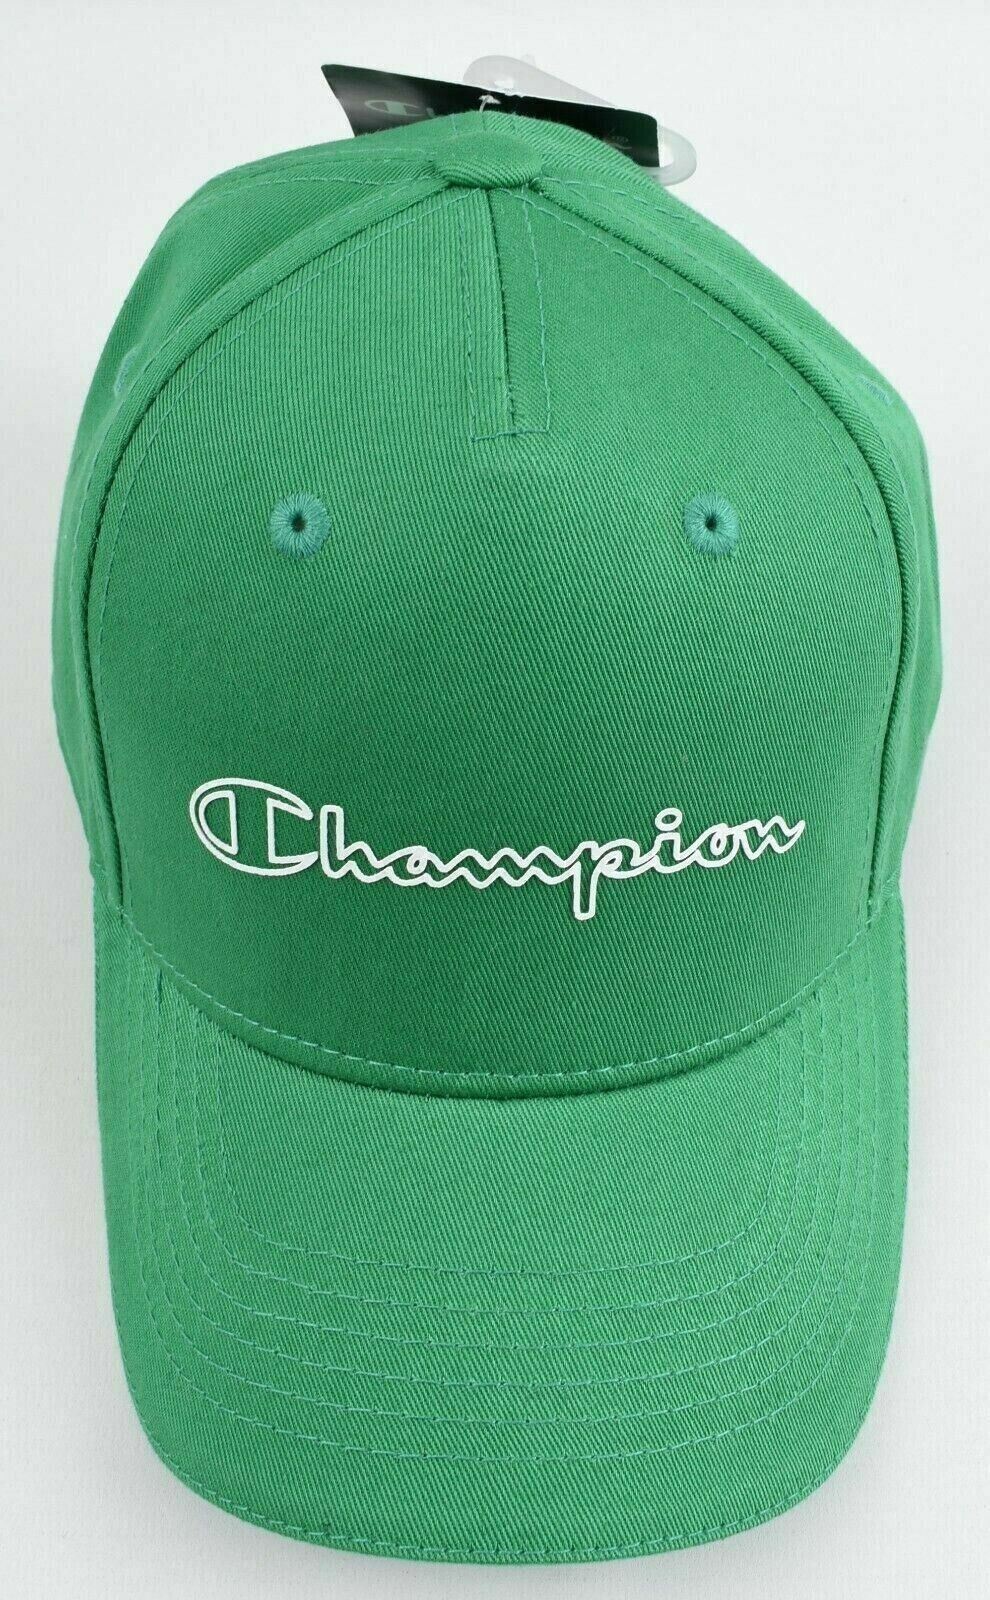 CHAMPION Kids' Green Baseball Cap, Hat, One Size Youth (Older Kids)